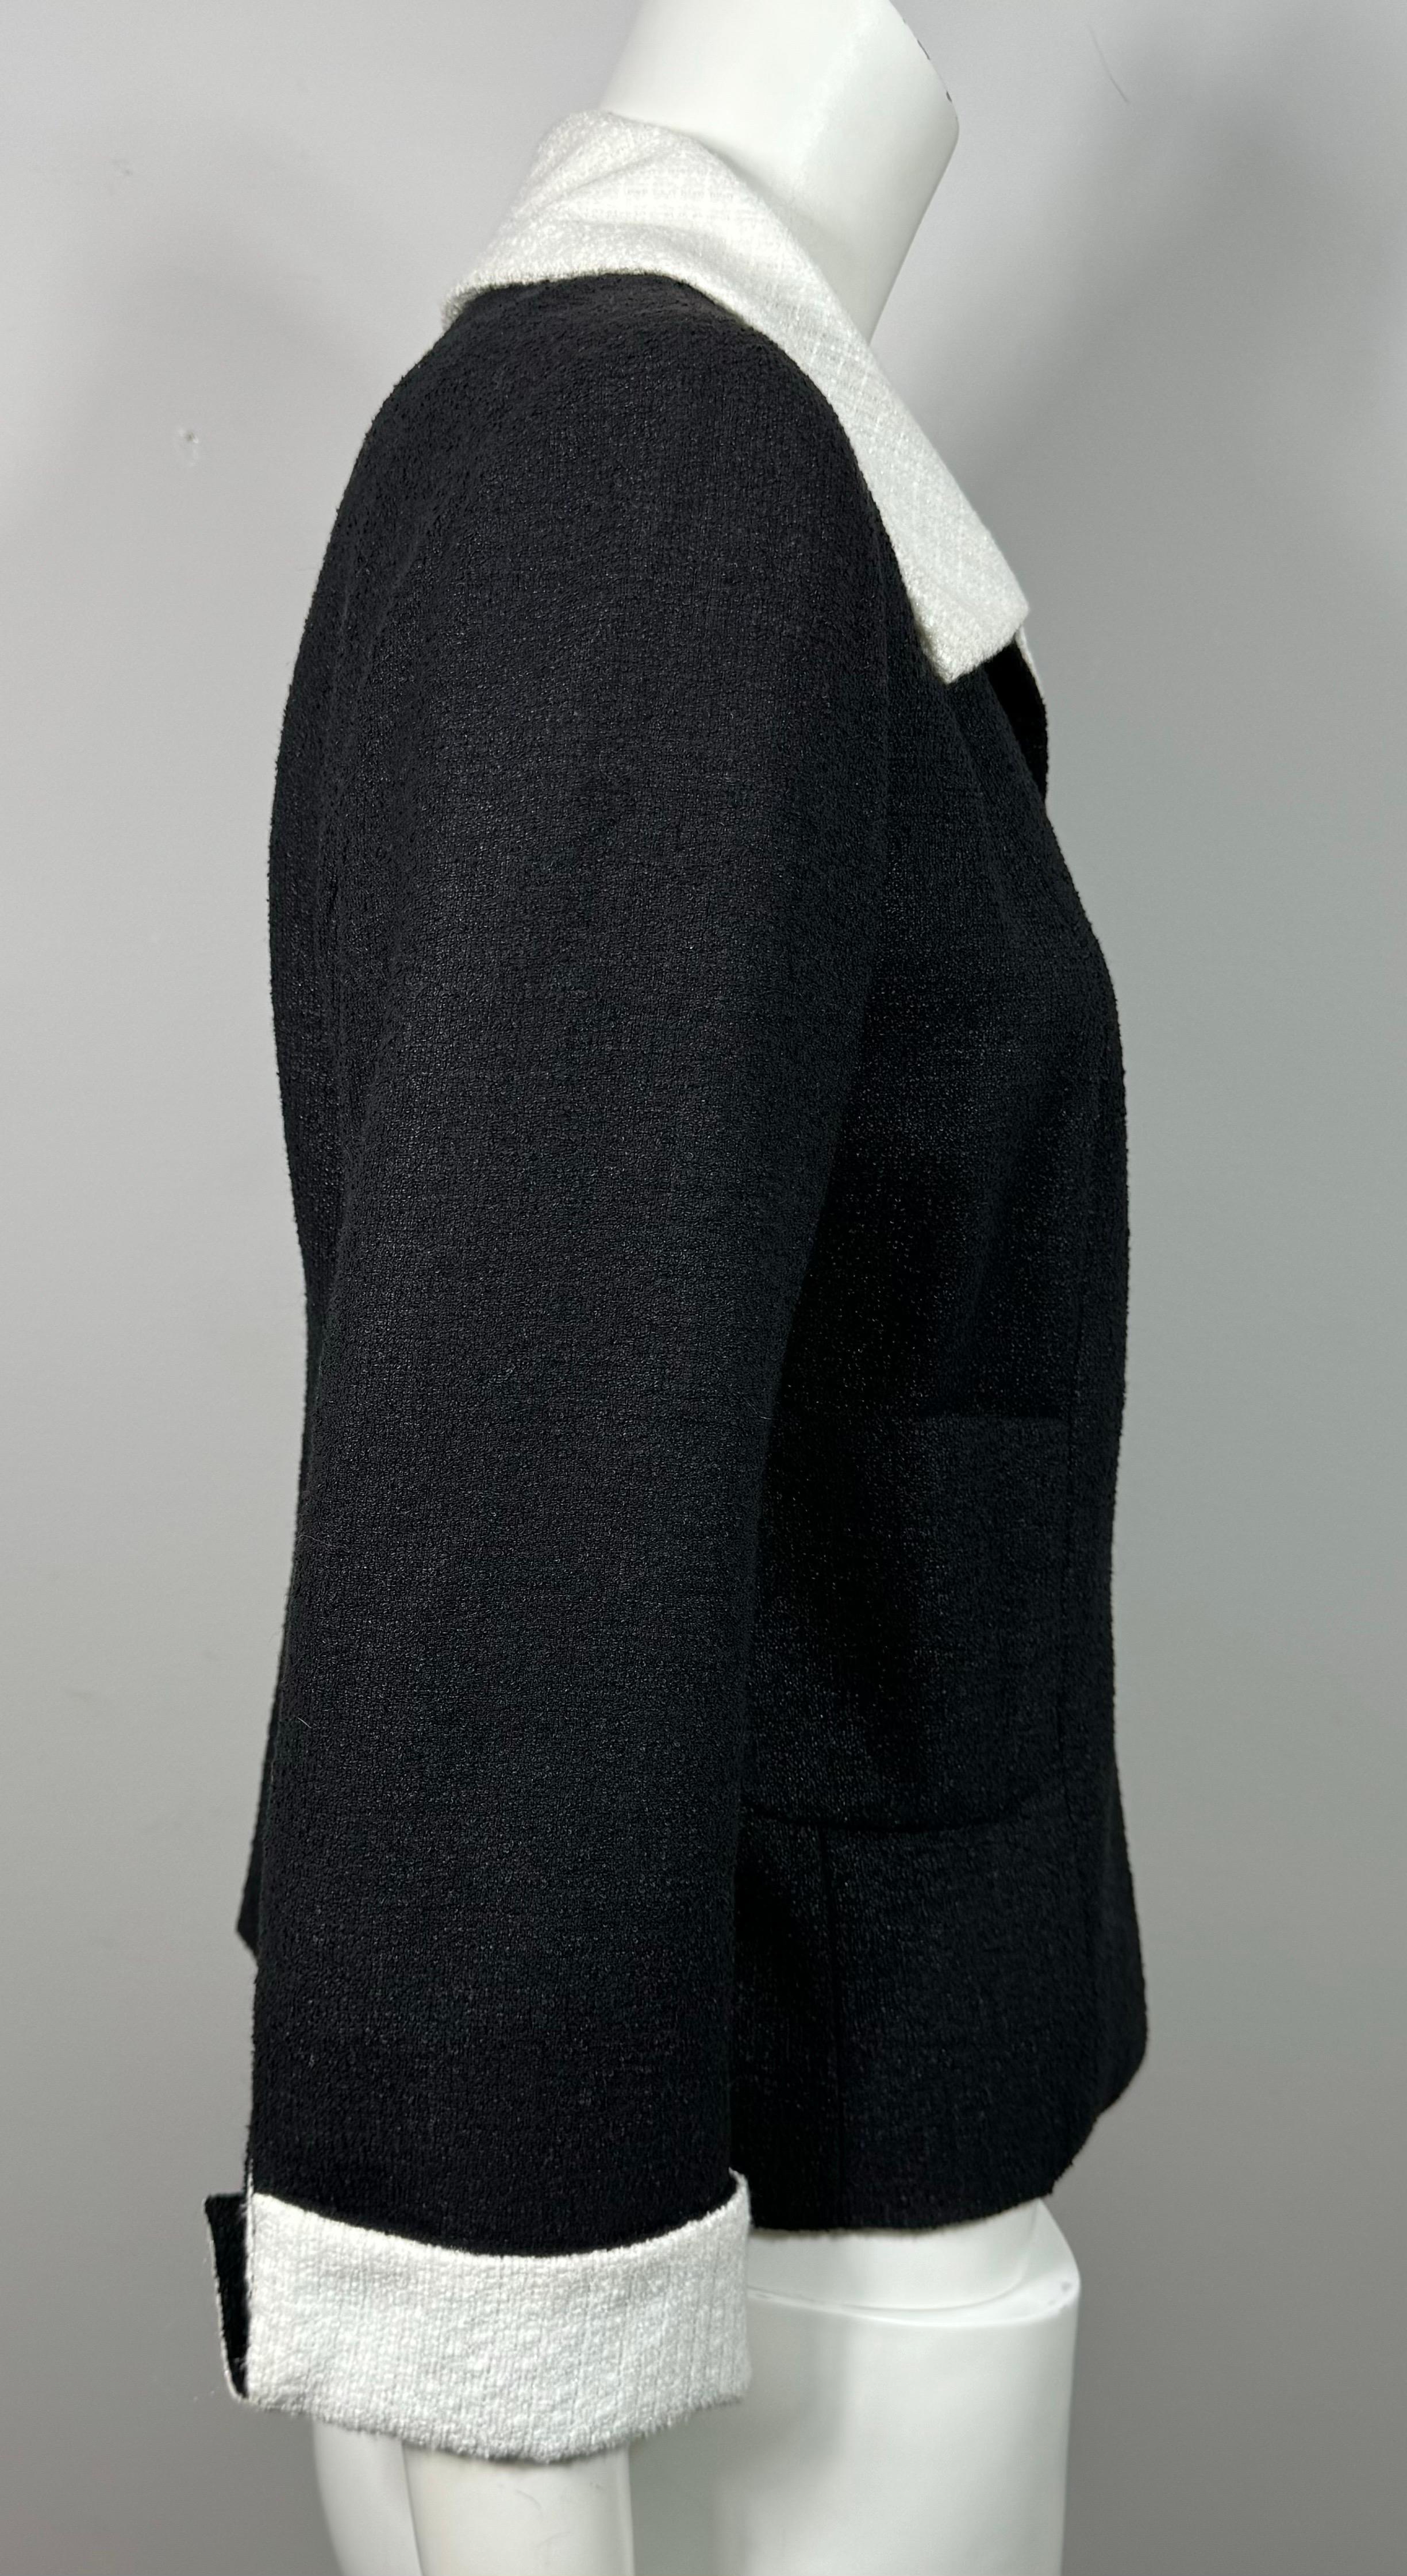 Chanel Runway Spring 2009 Black Linen Blend Jacket w/ White Collar/Cuff - 42 For Sale 5